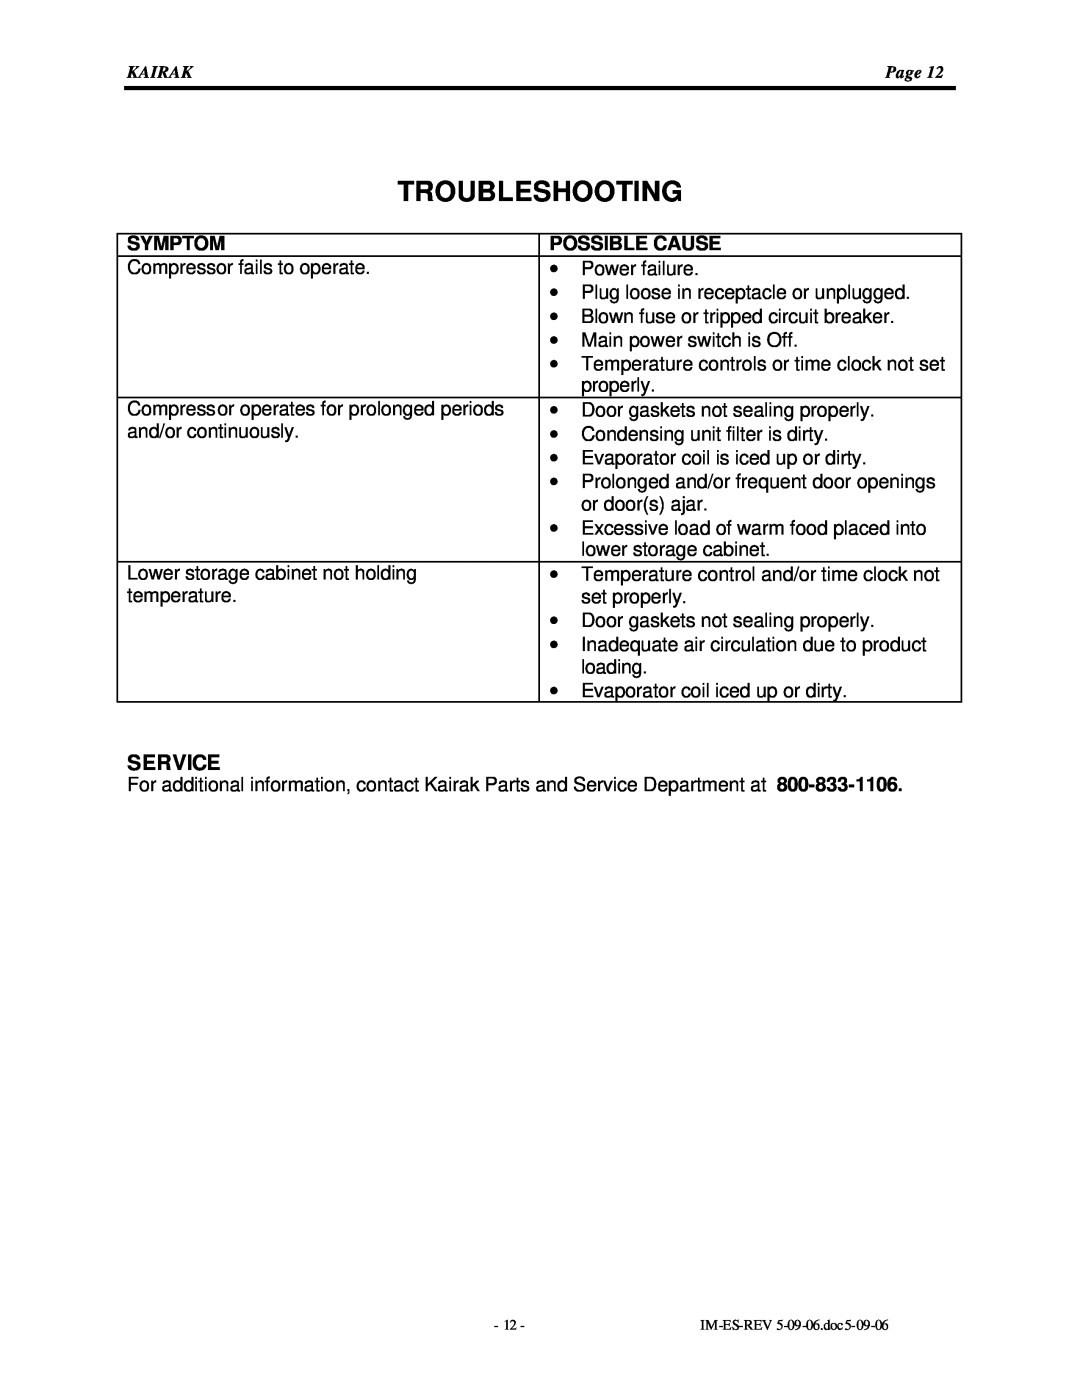 Kairak KRES instruction manual Troubleshooting, Service 